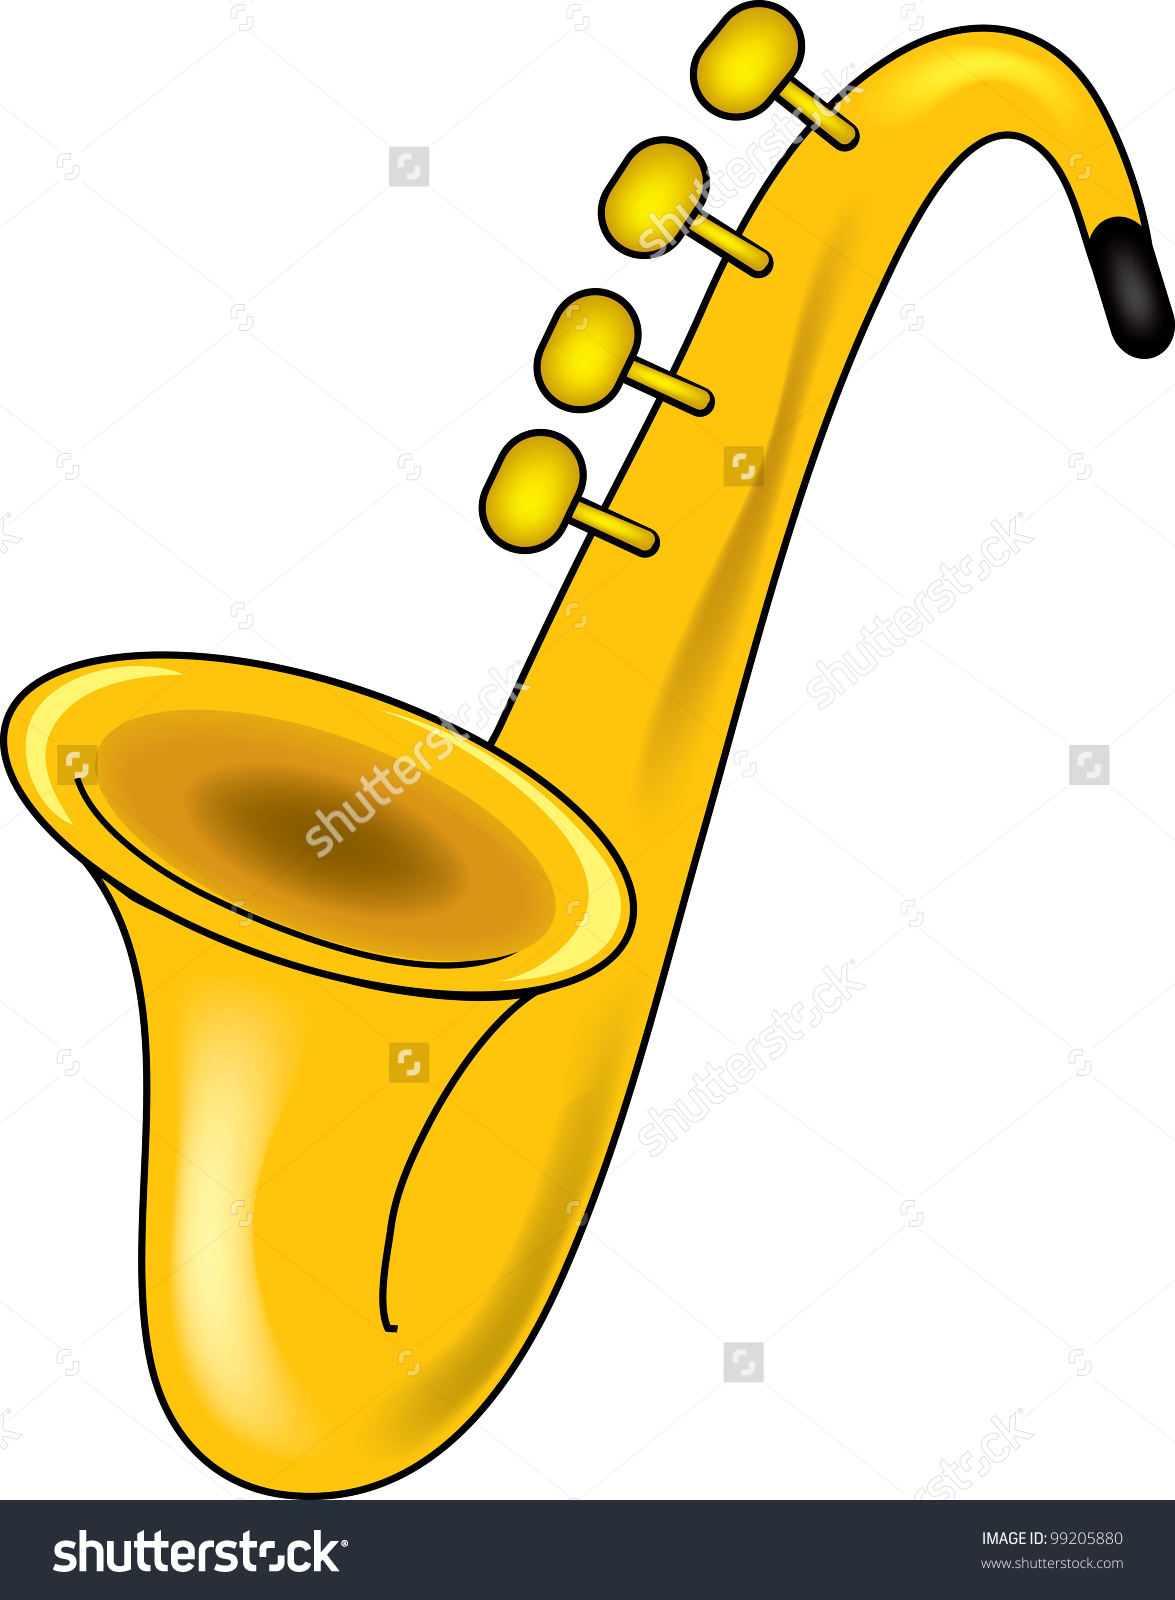 Clip Art Illustration of a saxophone.